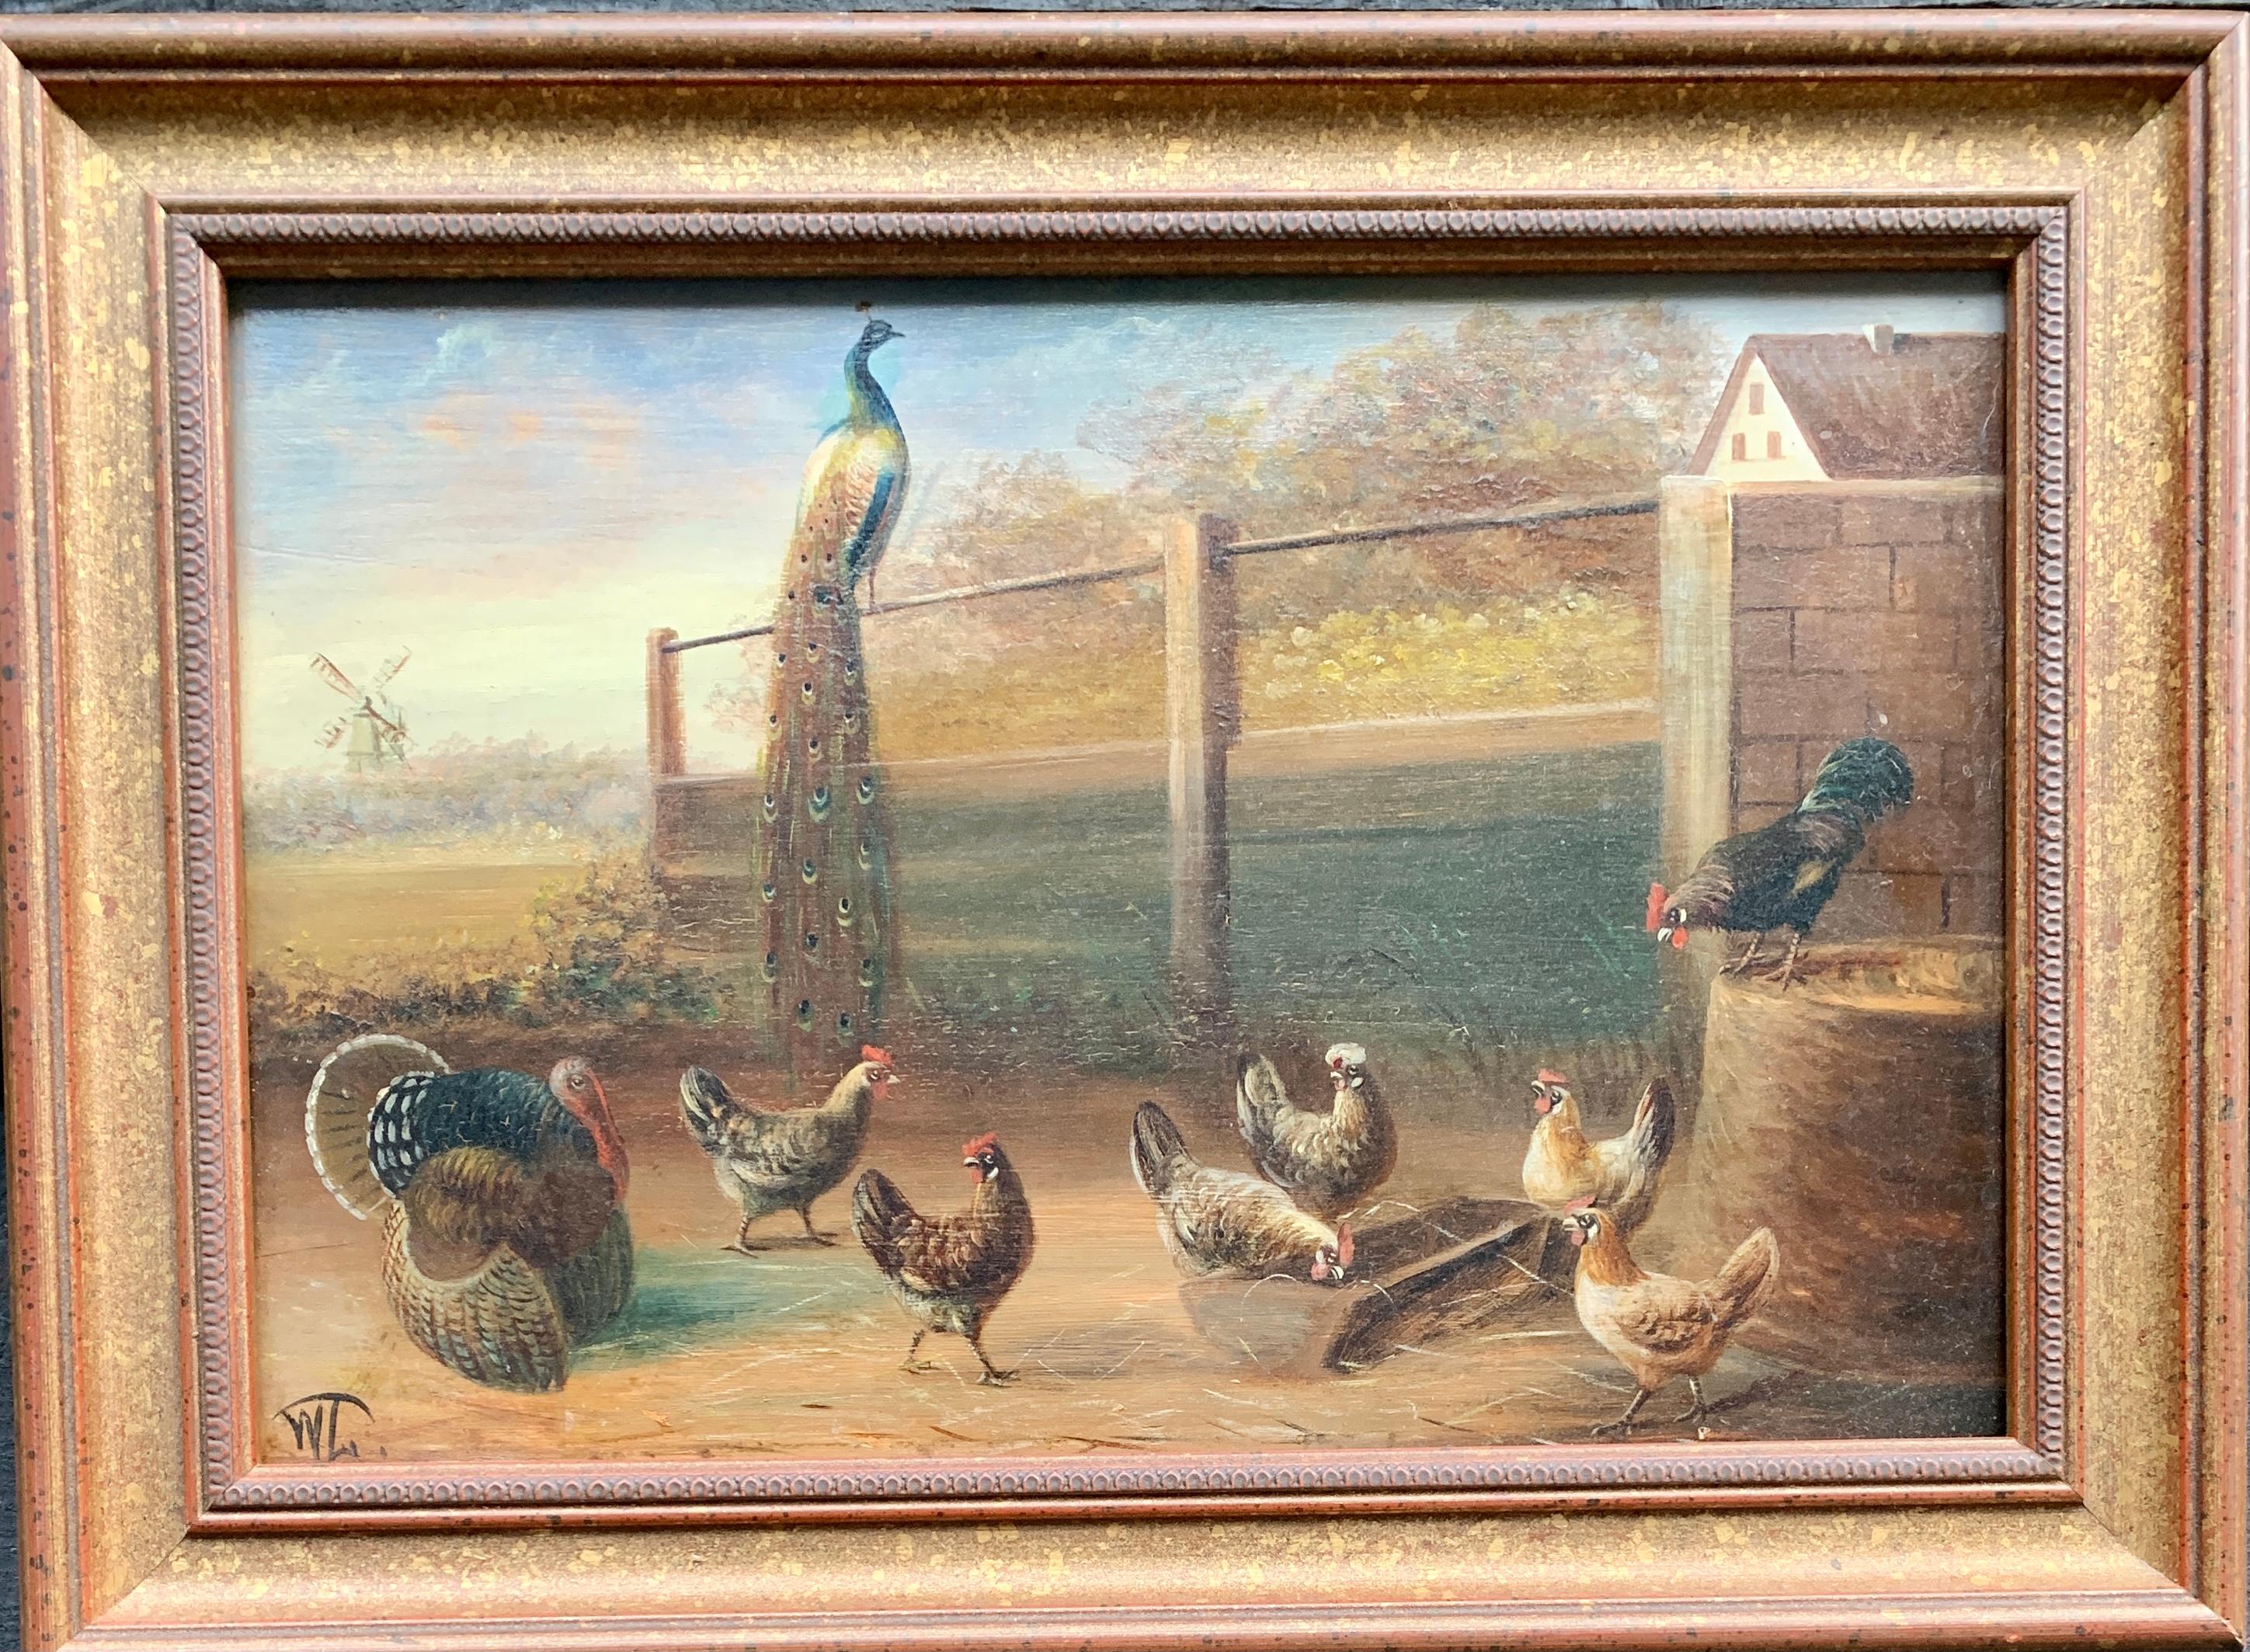 19th century Dutch or Flemish bird study in a landscape, with chickens, turkey 